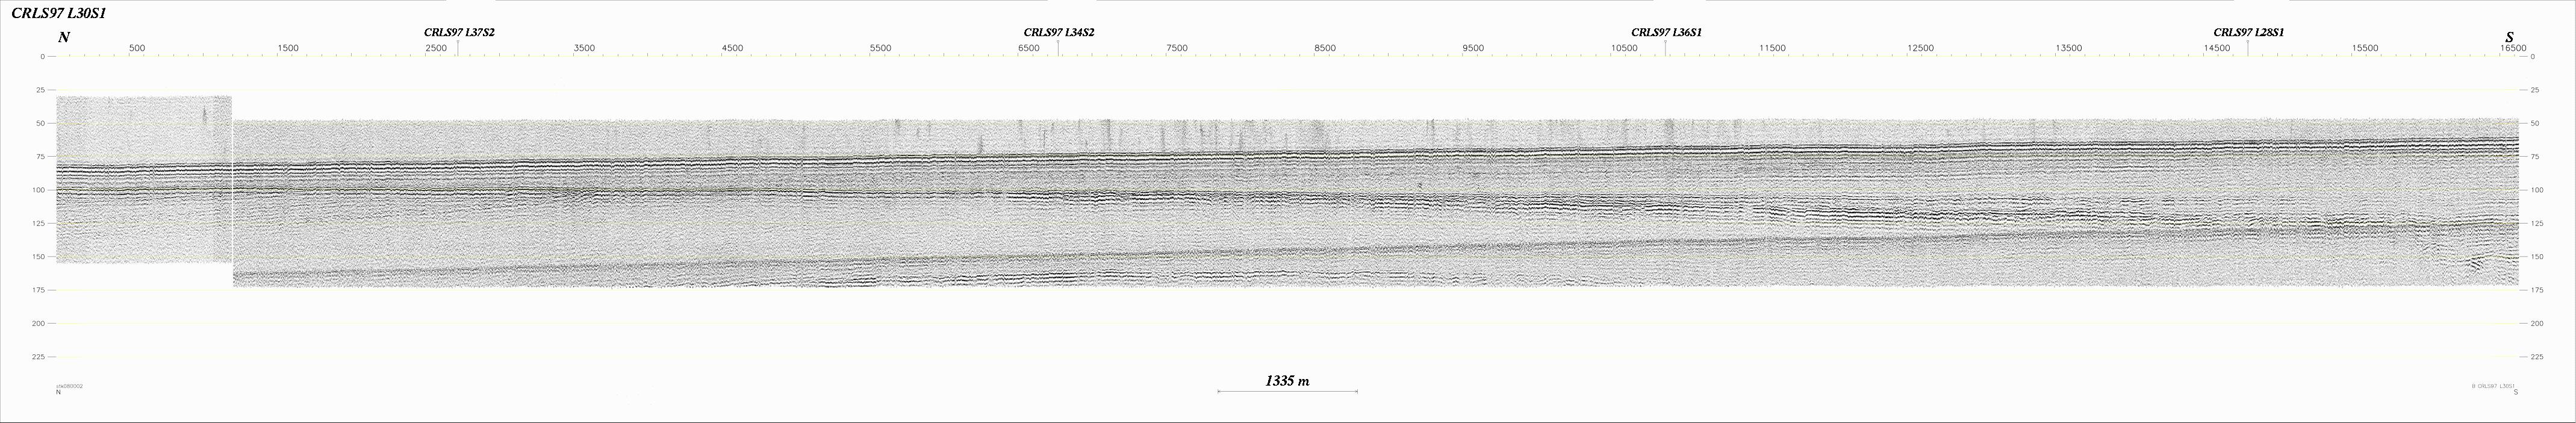 Seismic Reflection Profile Line No.: L30s1 (548489 bytes)